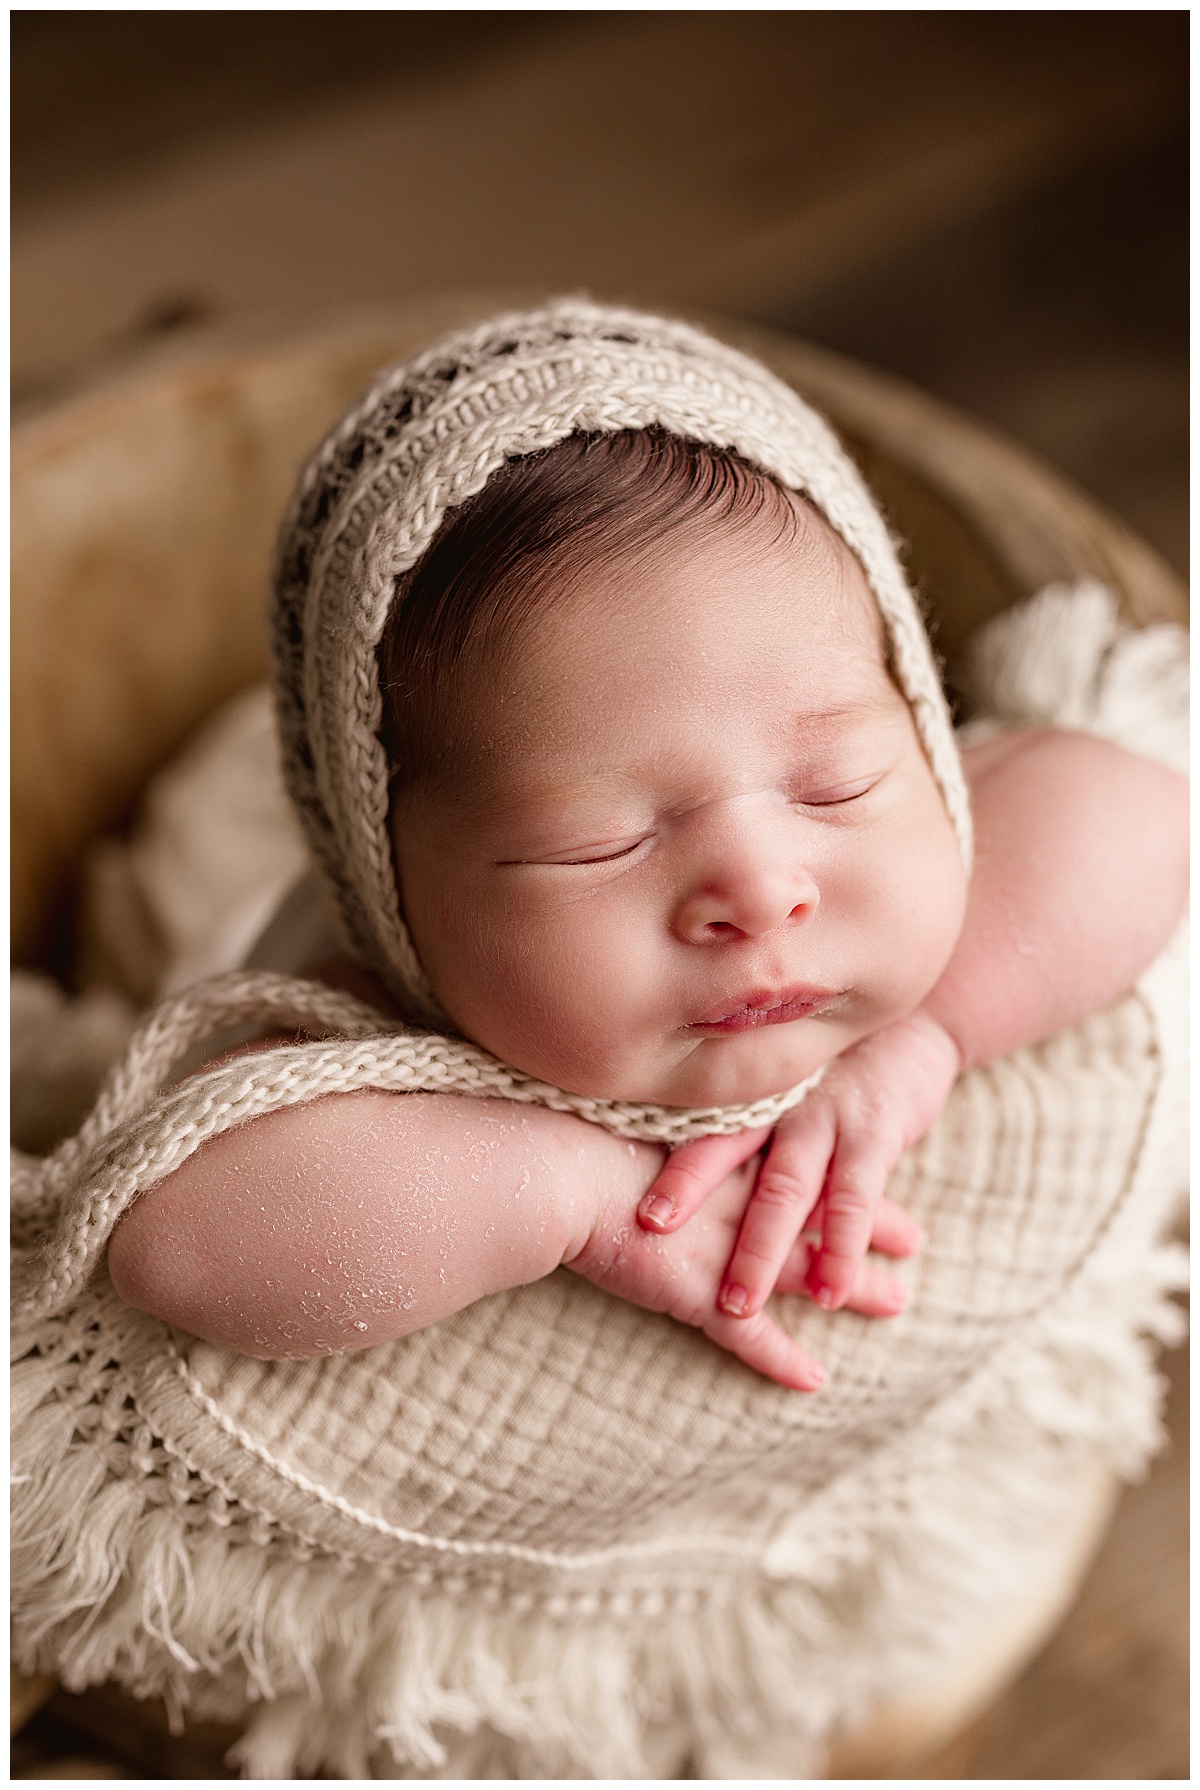 Baby girl sleeps with eyes closed tight for Virginia Newborn Photographer